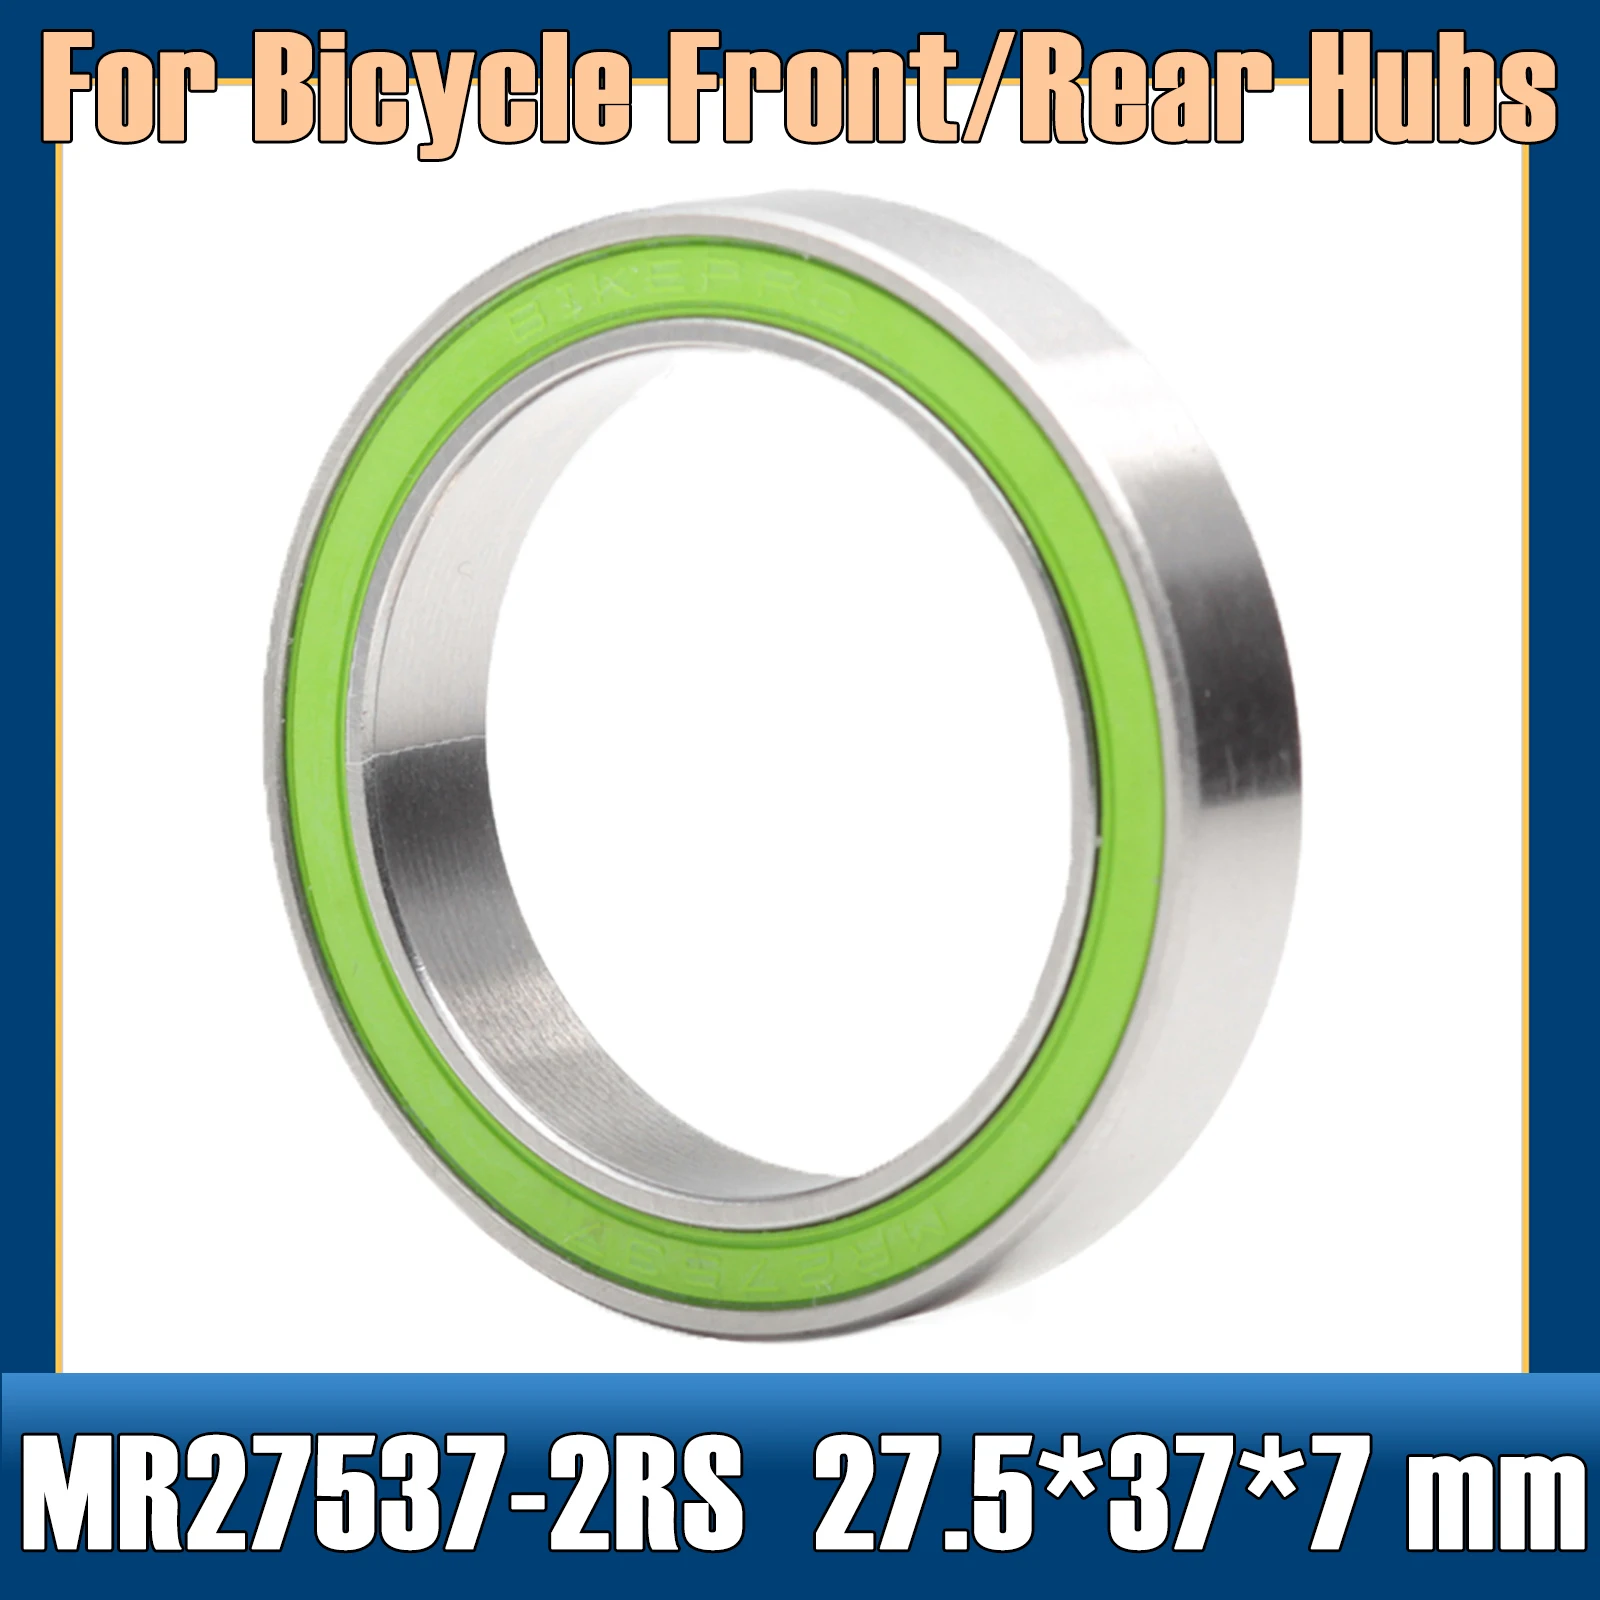 MR27537-2RS Bearing 27.5*37*7 mm ( 1 PC ) 27537 RS Bicycle Hub Front Rear Hubs Wheel 27.5 37 7 Ball Bearings